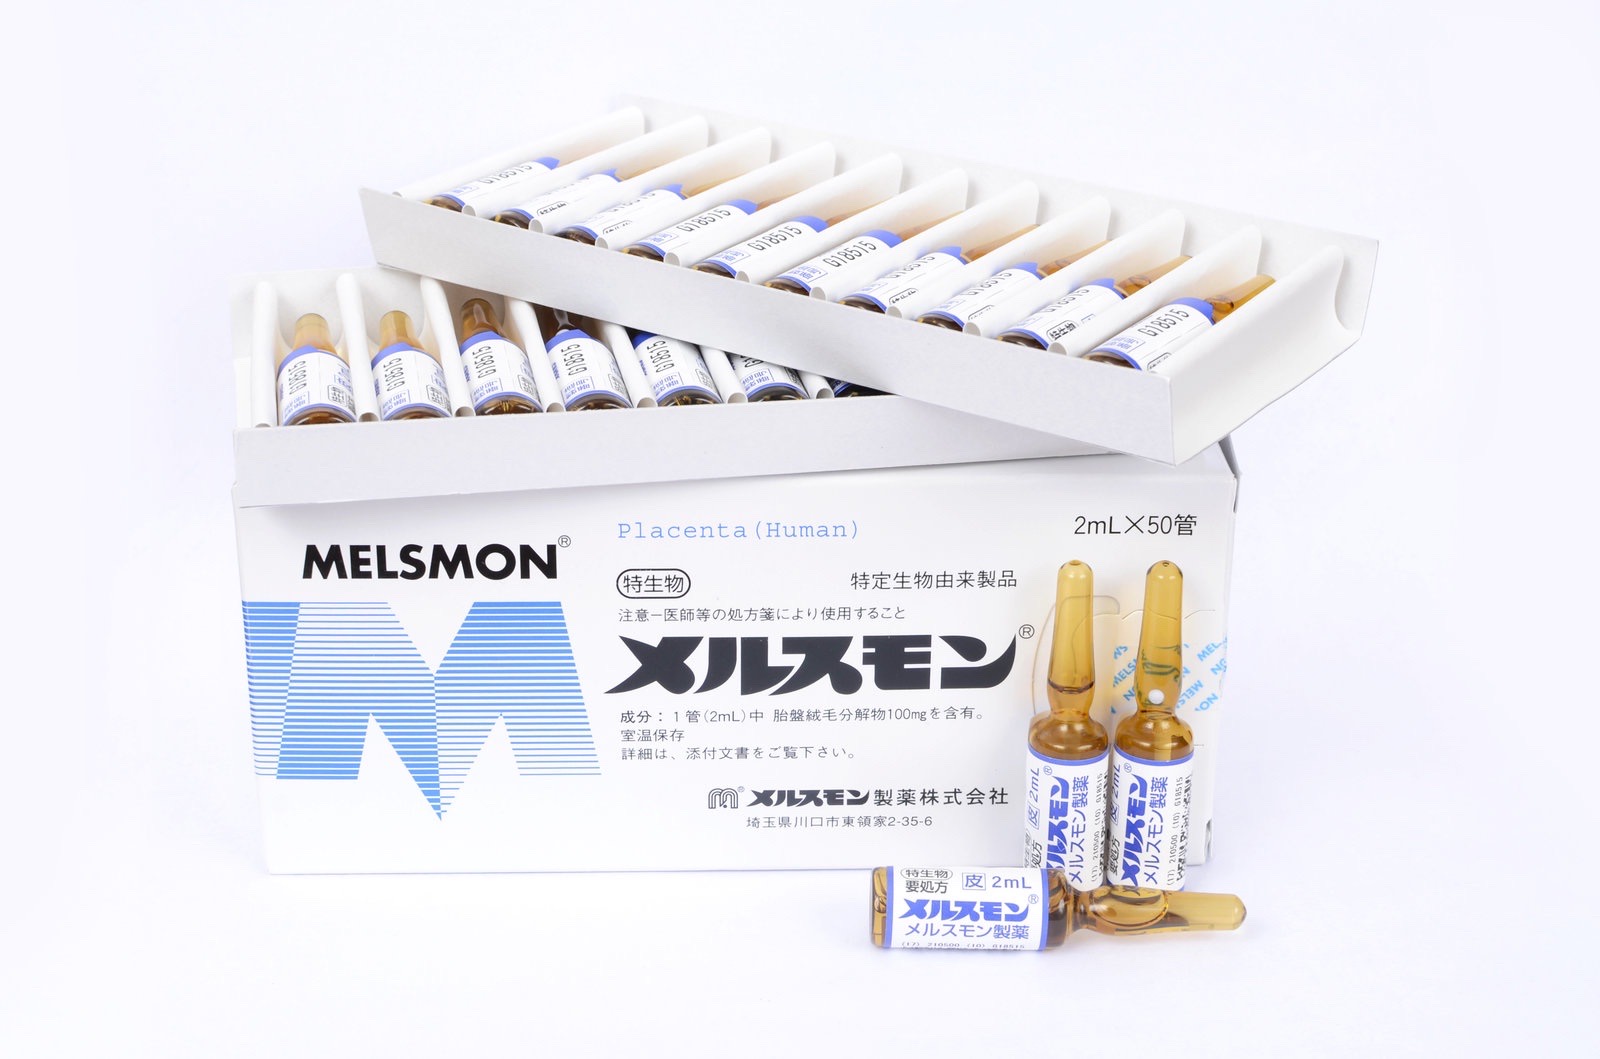 Плацентарные препараты Laennec и Melsmon, Япония